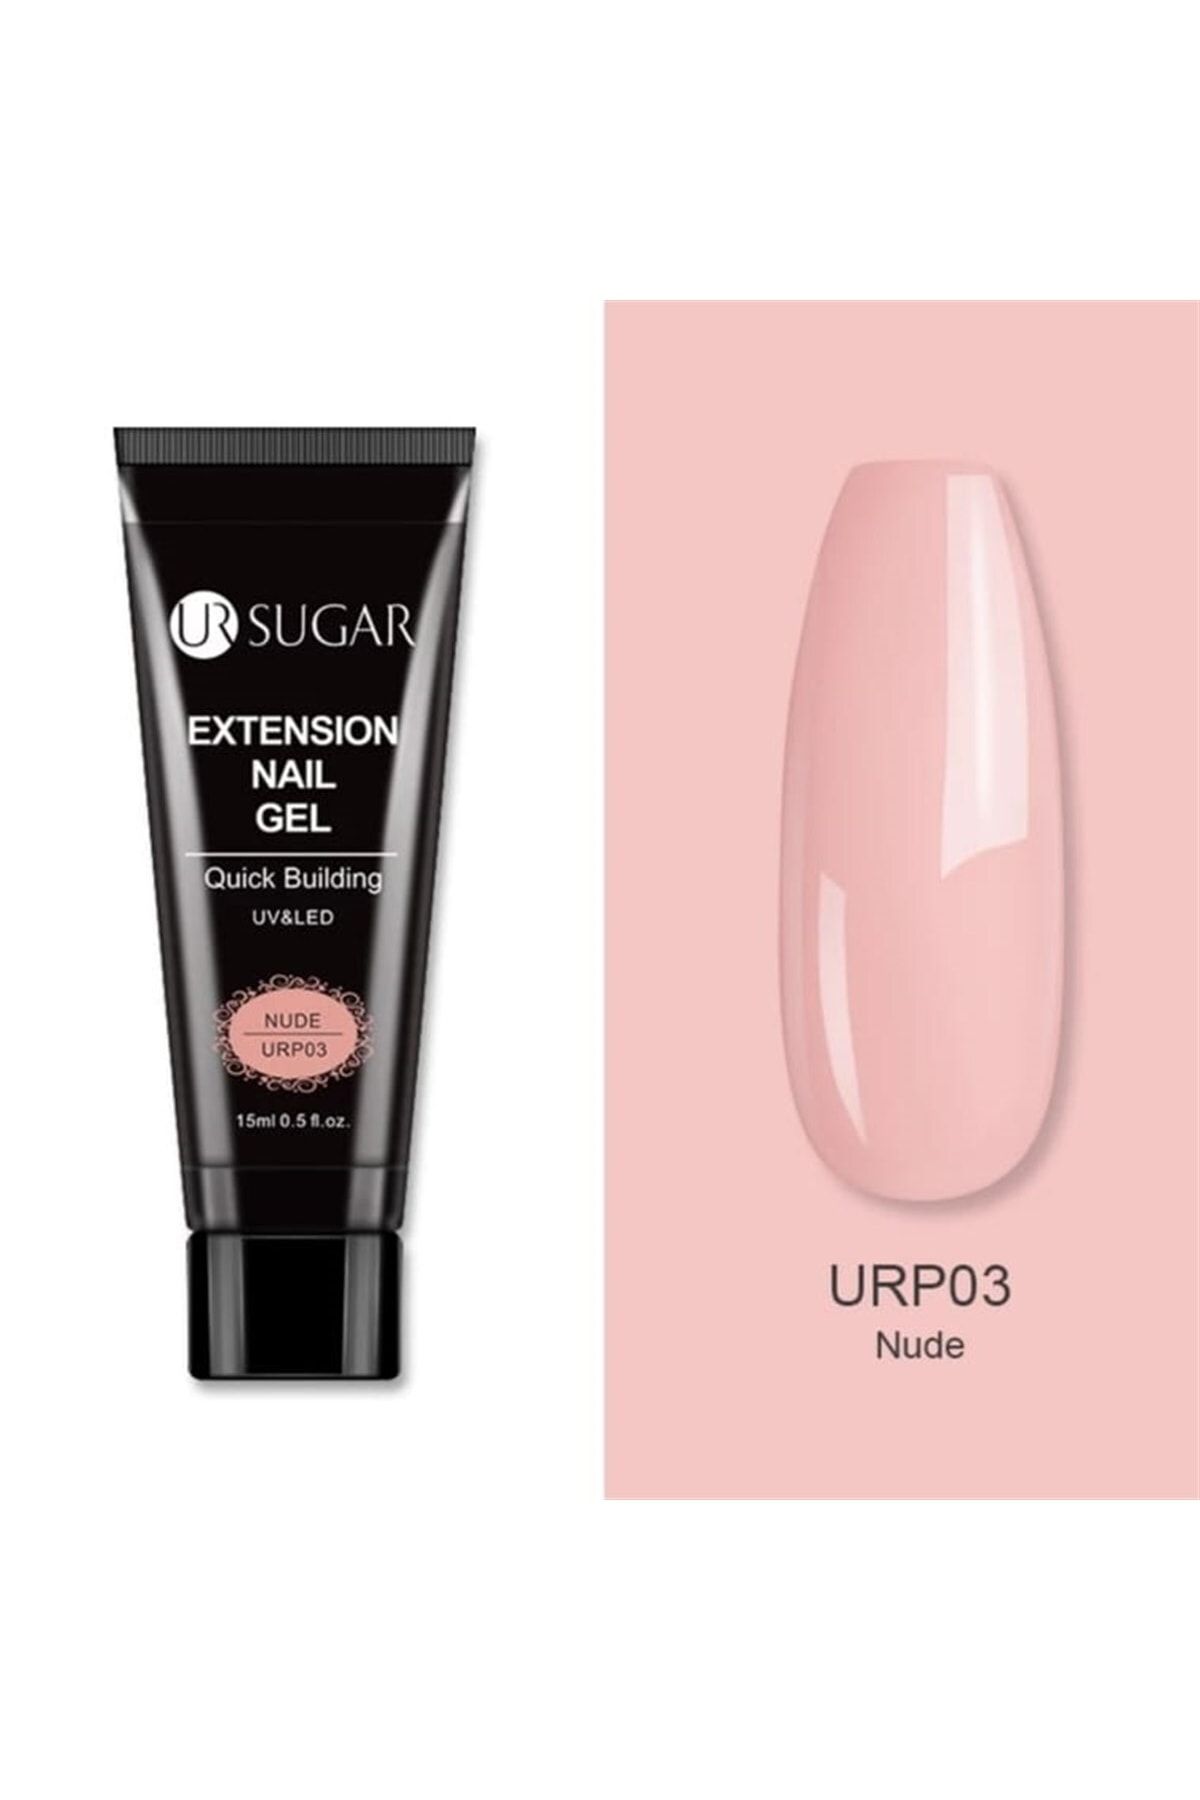 URSUGAR Poly Extension Gel Nude (49154-3)